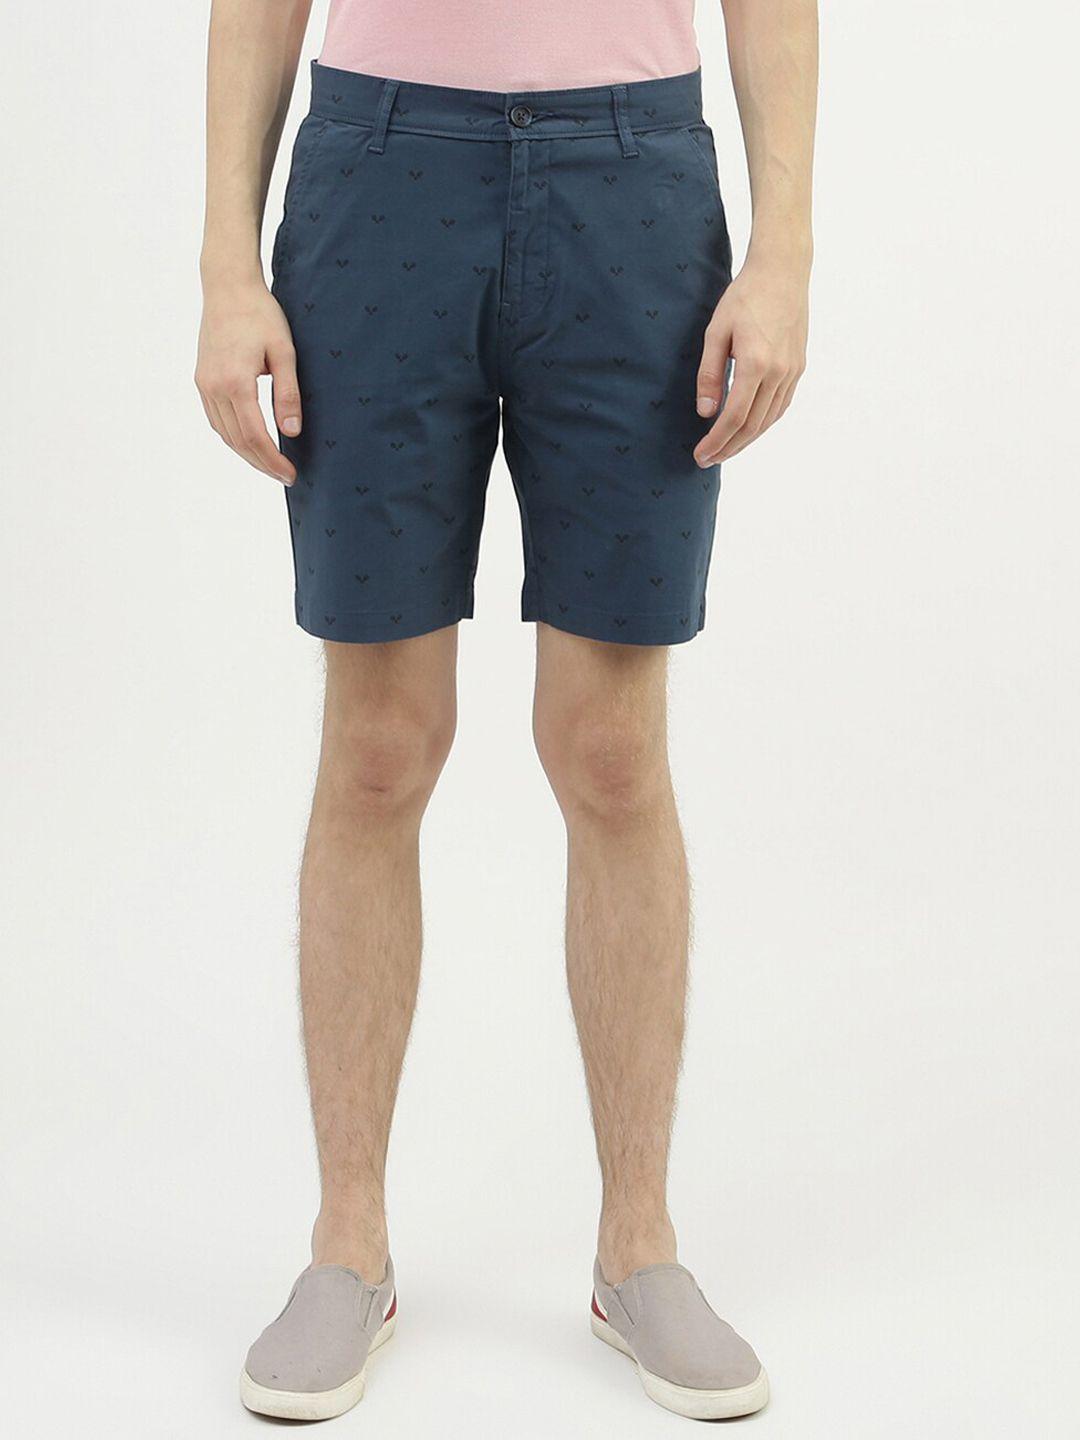 united colors of benetton men conversational cotton printed slim fit shorts